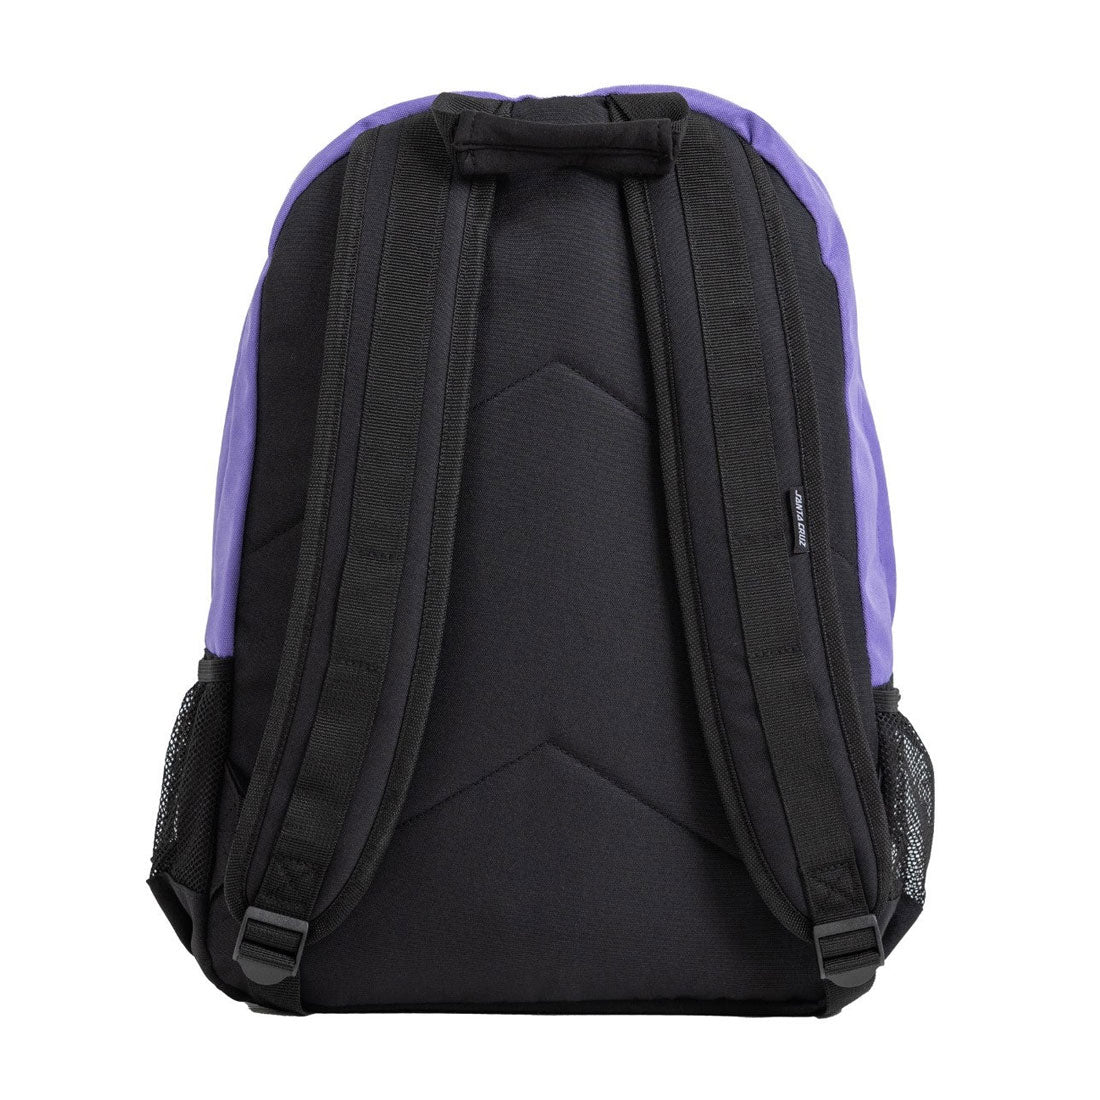 Santa Cruz Double Dot Backpack - Lilac Bags and Backpacks